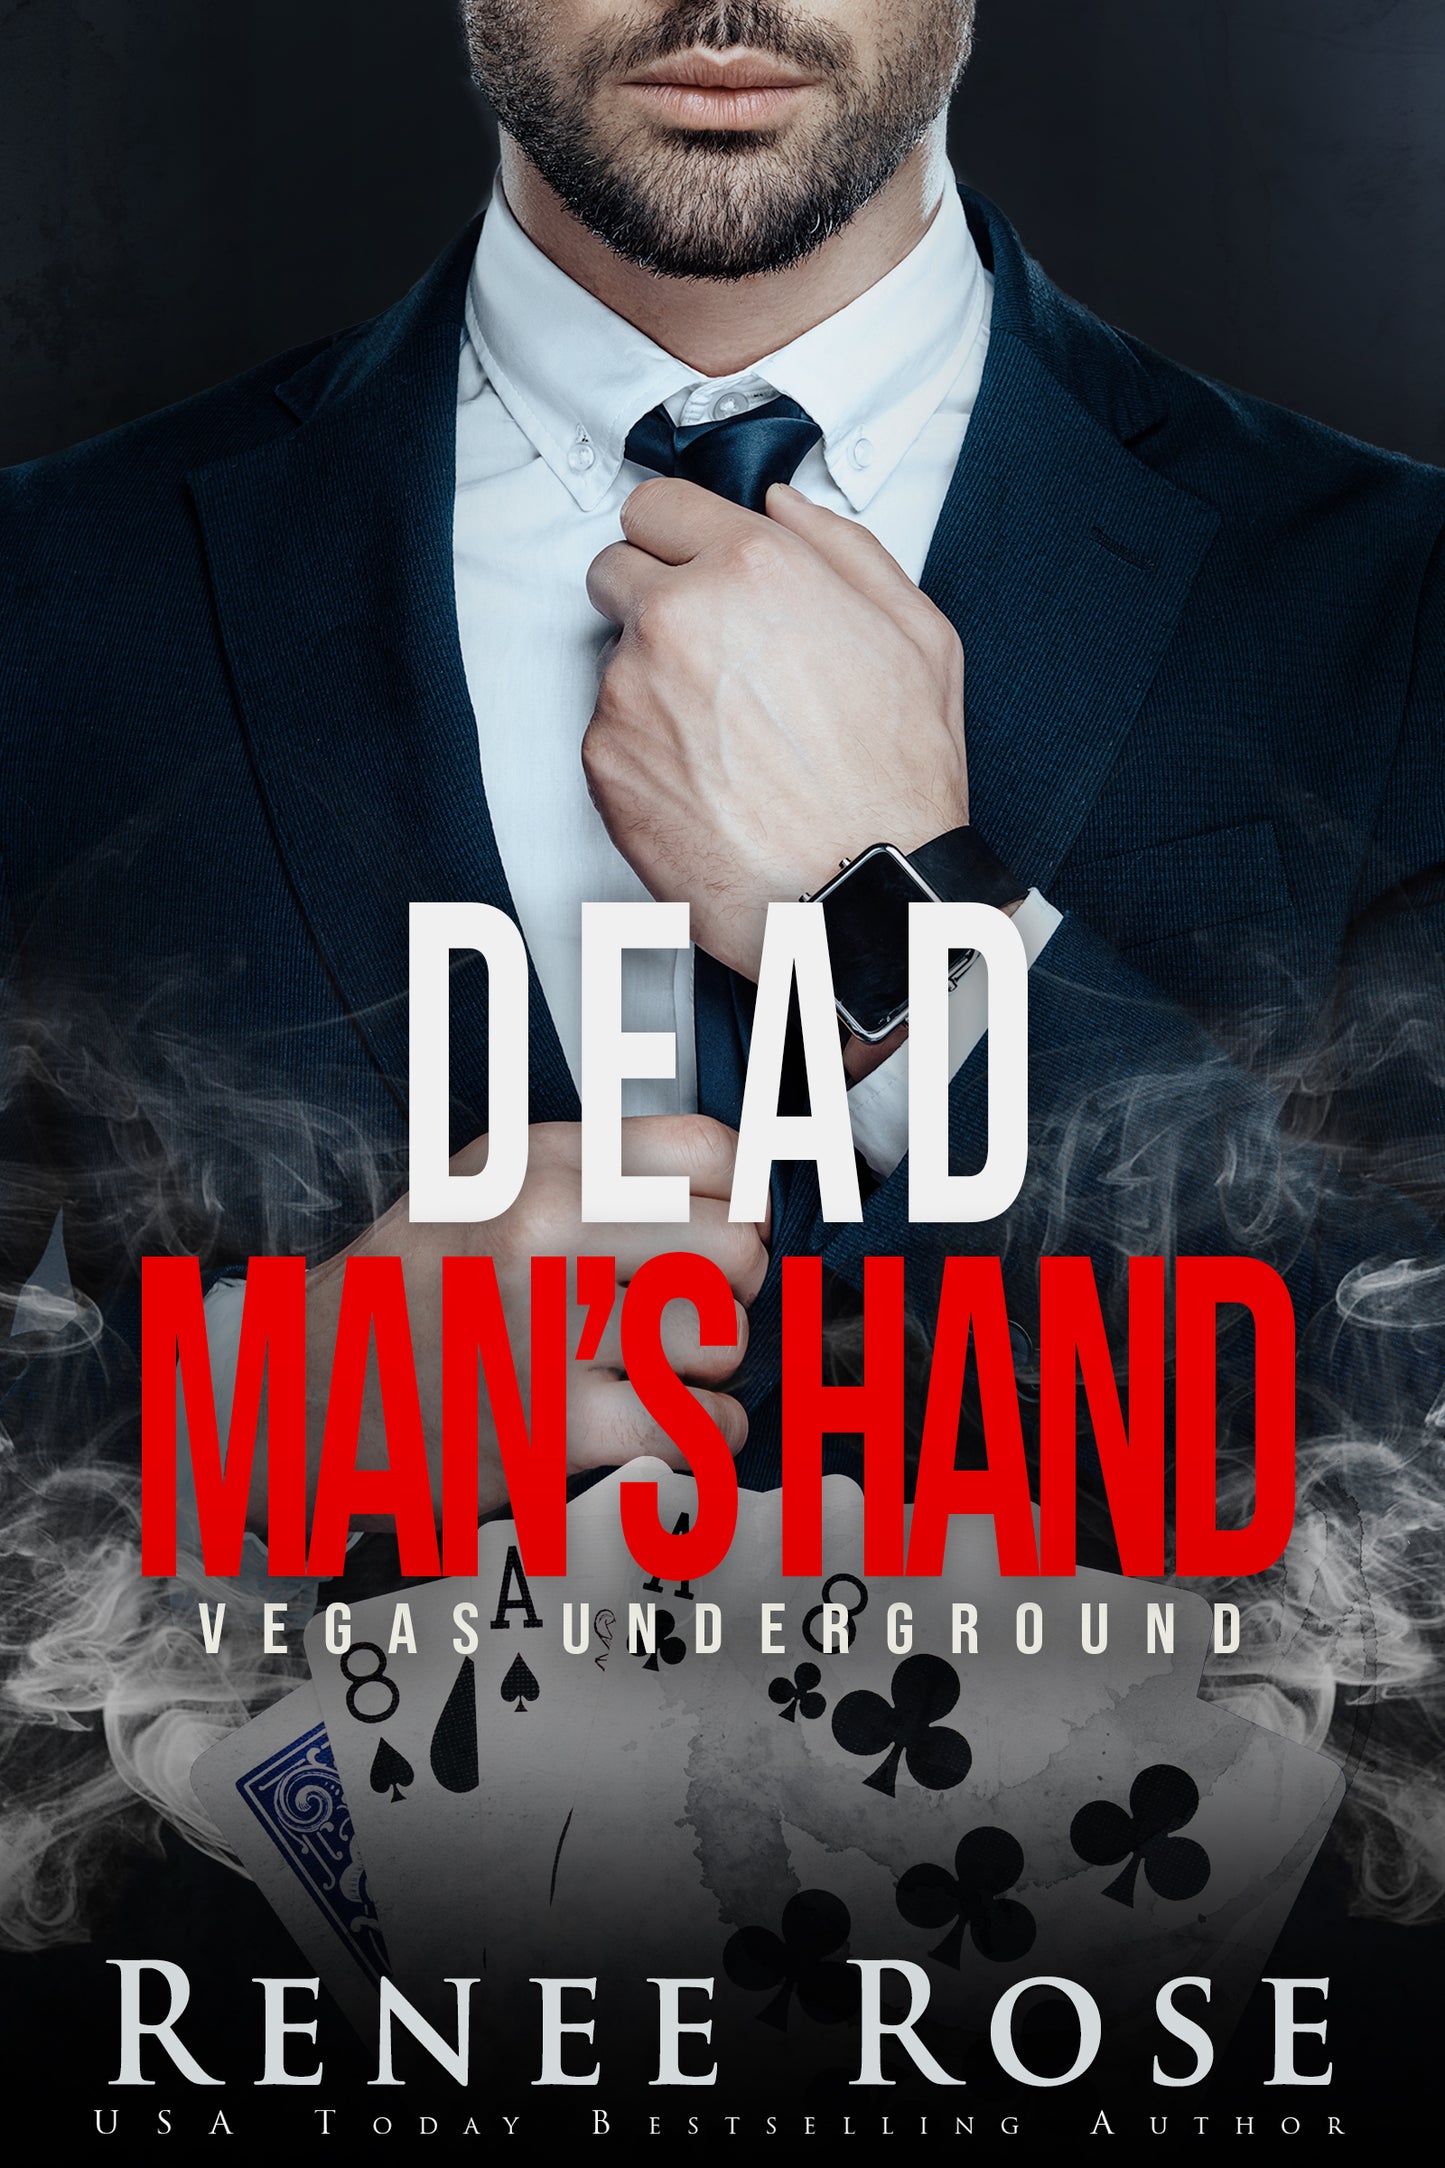 Vegas Underground E-Book 7: Dead Man's Hand